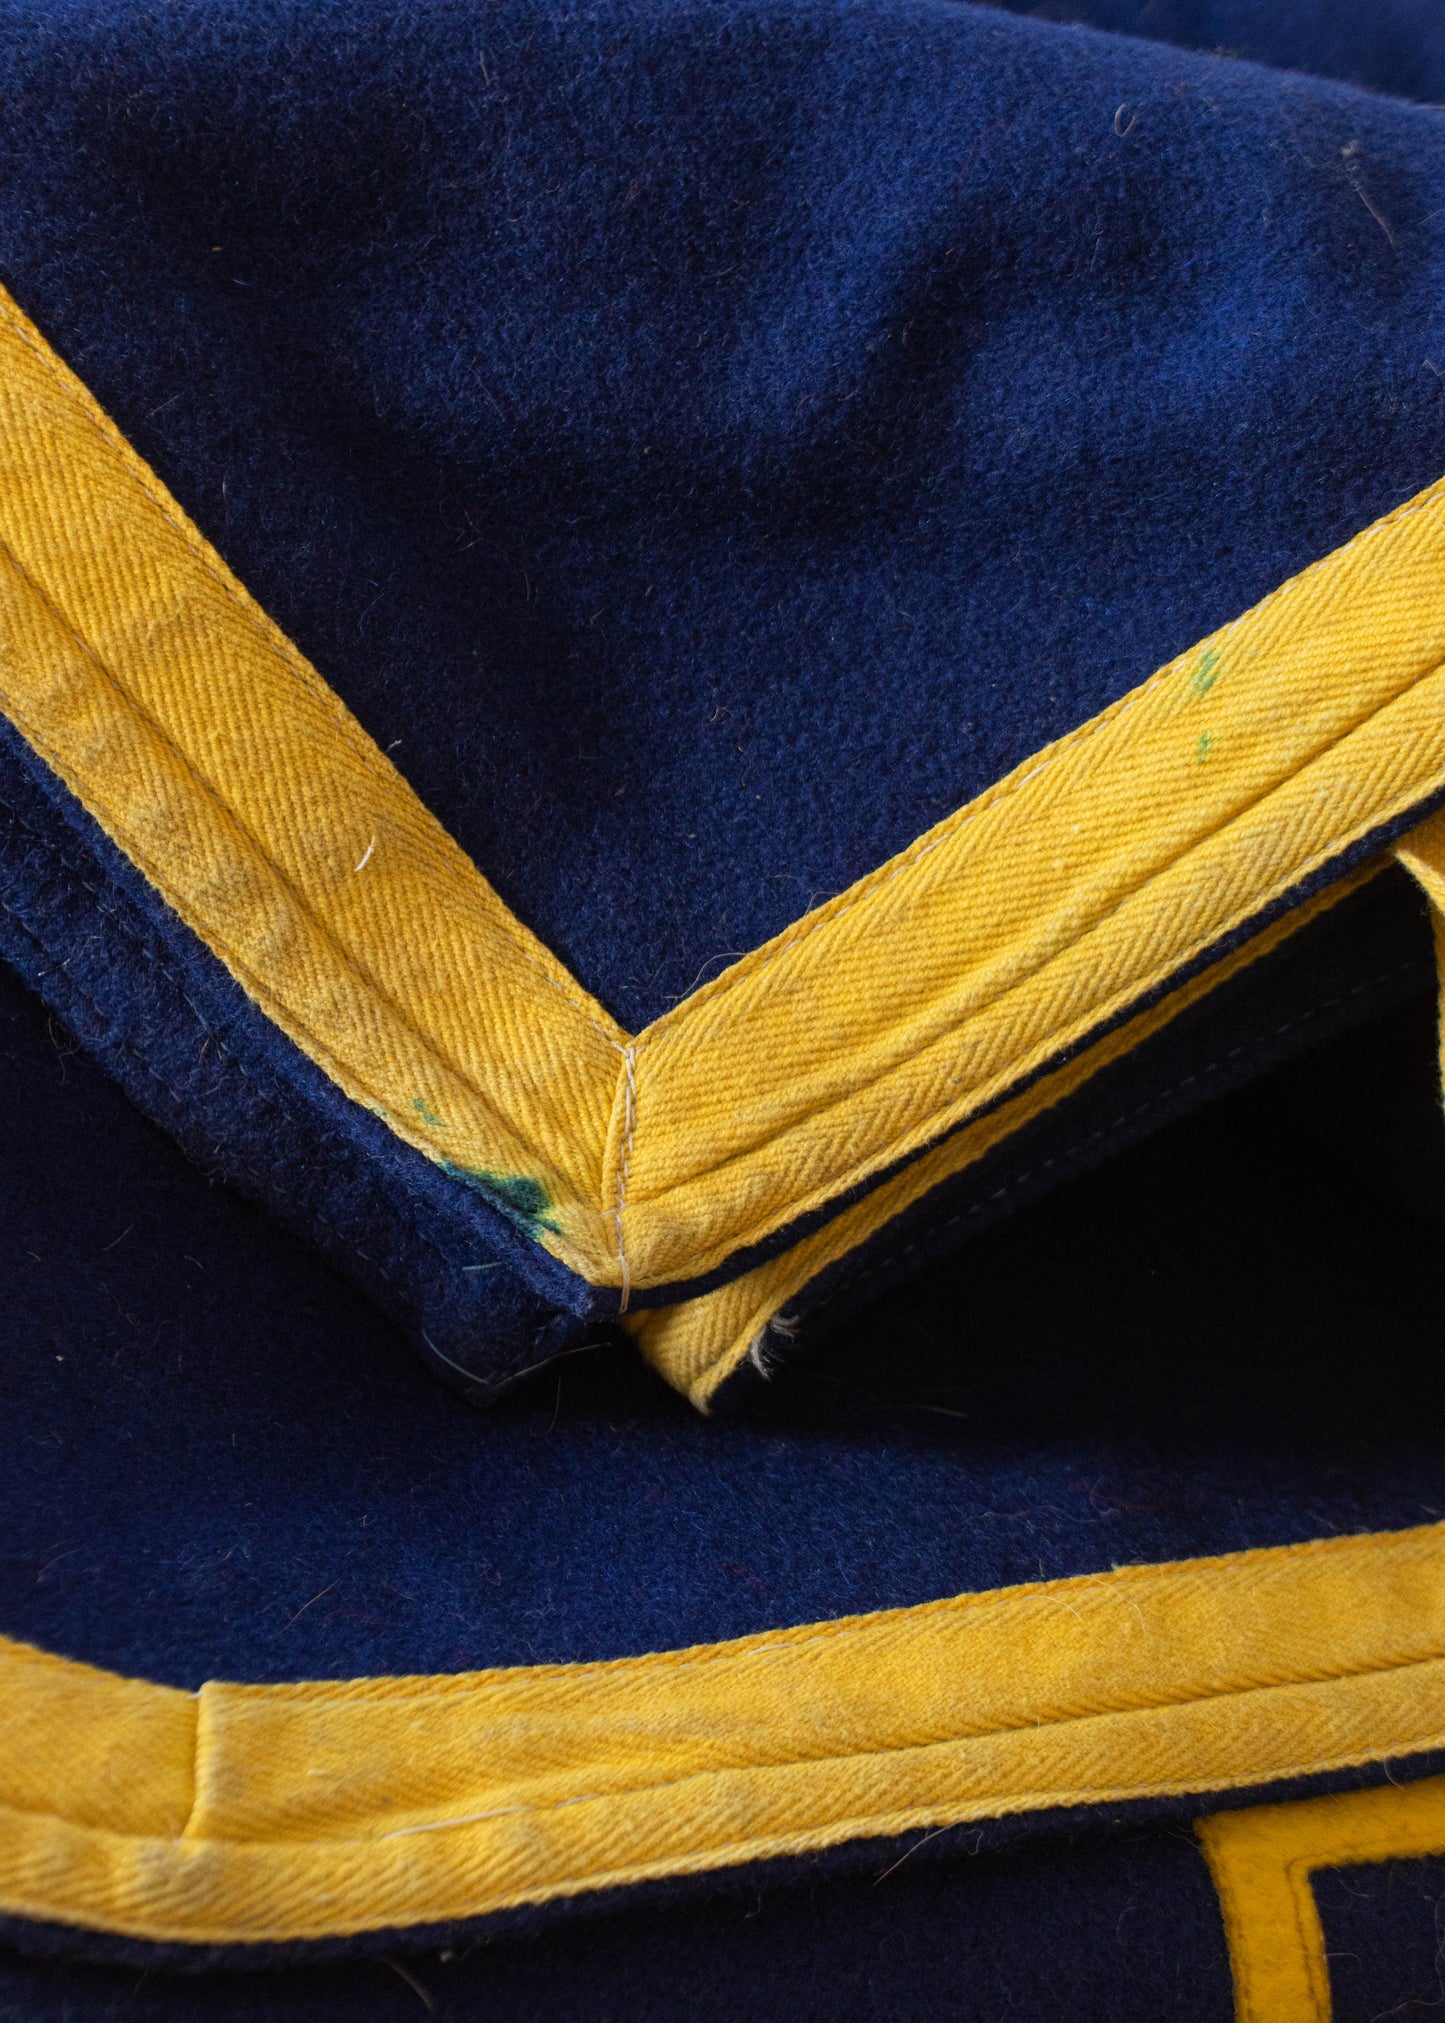 1972 Blue Bonnets Horse Stable Wool Blanket